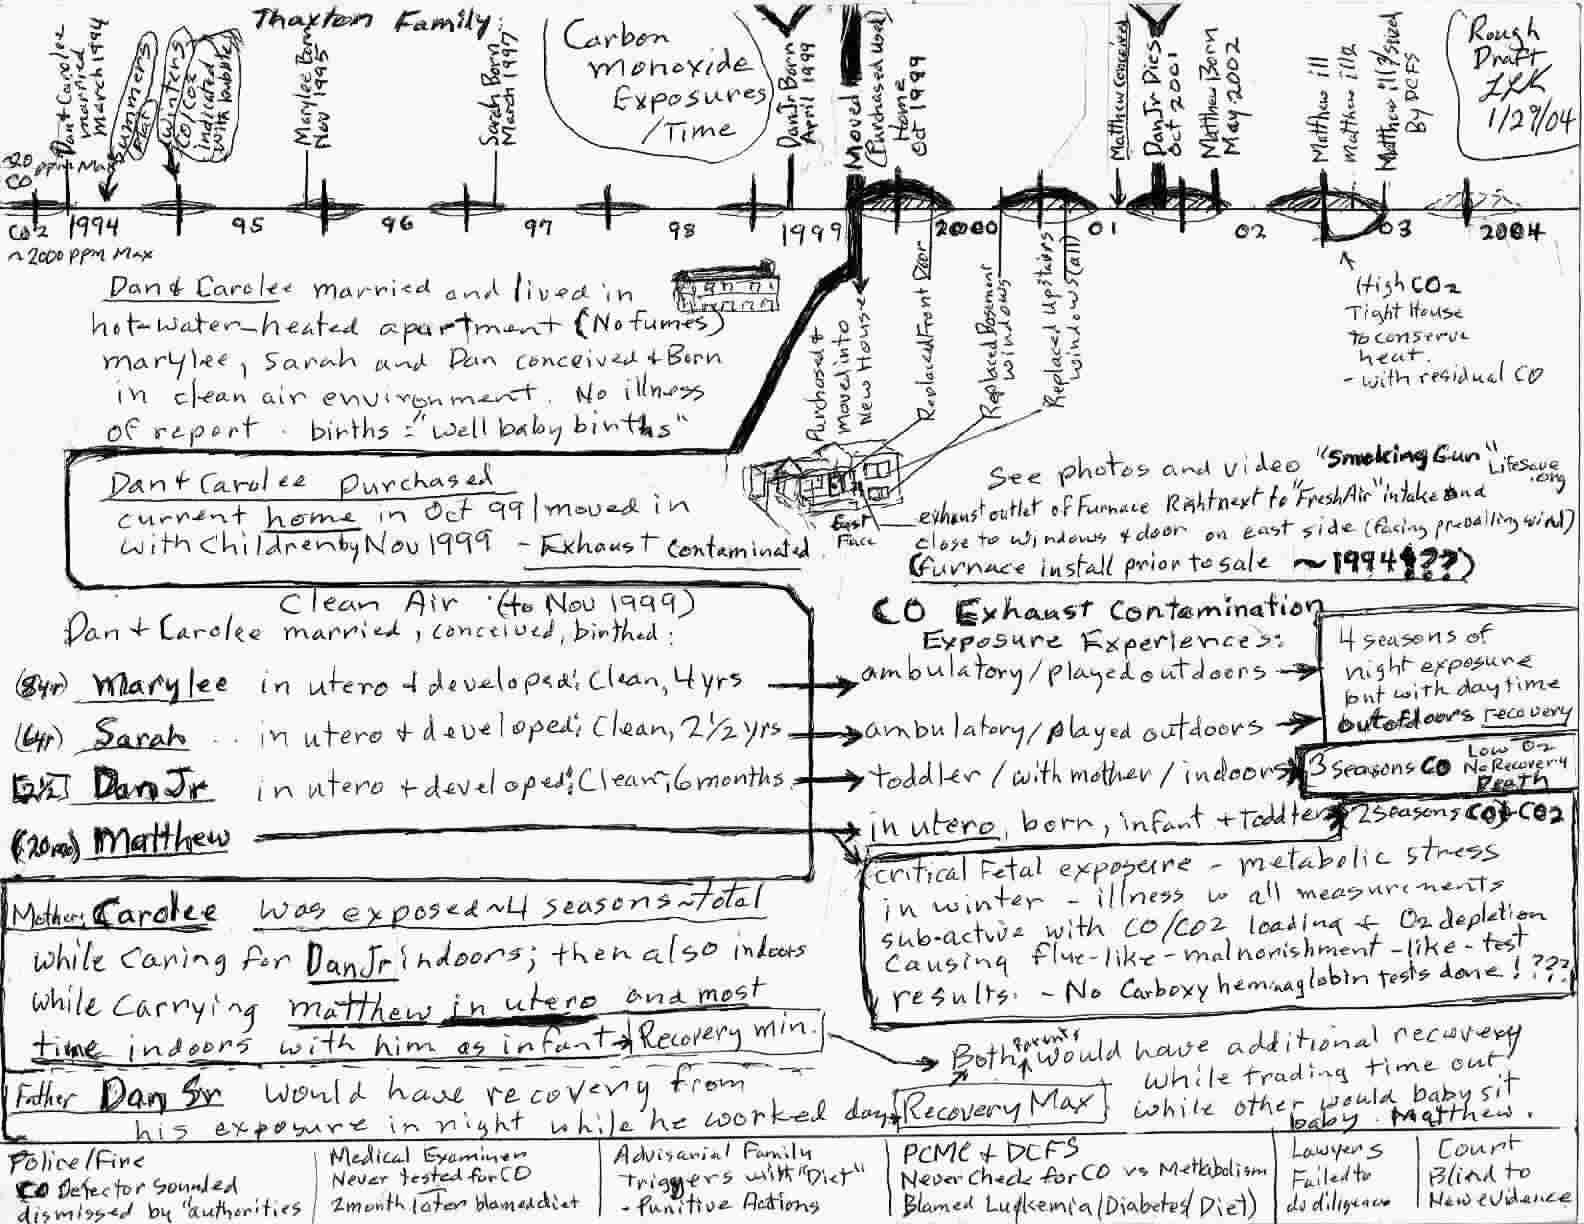 Time line chart -  Original rough draft -TLR 1/27/04